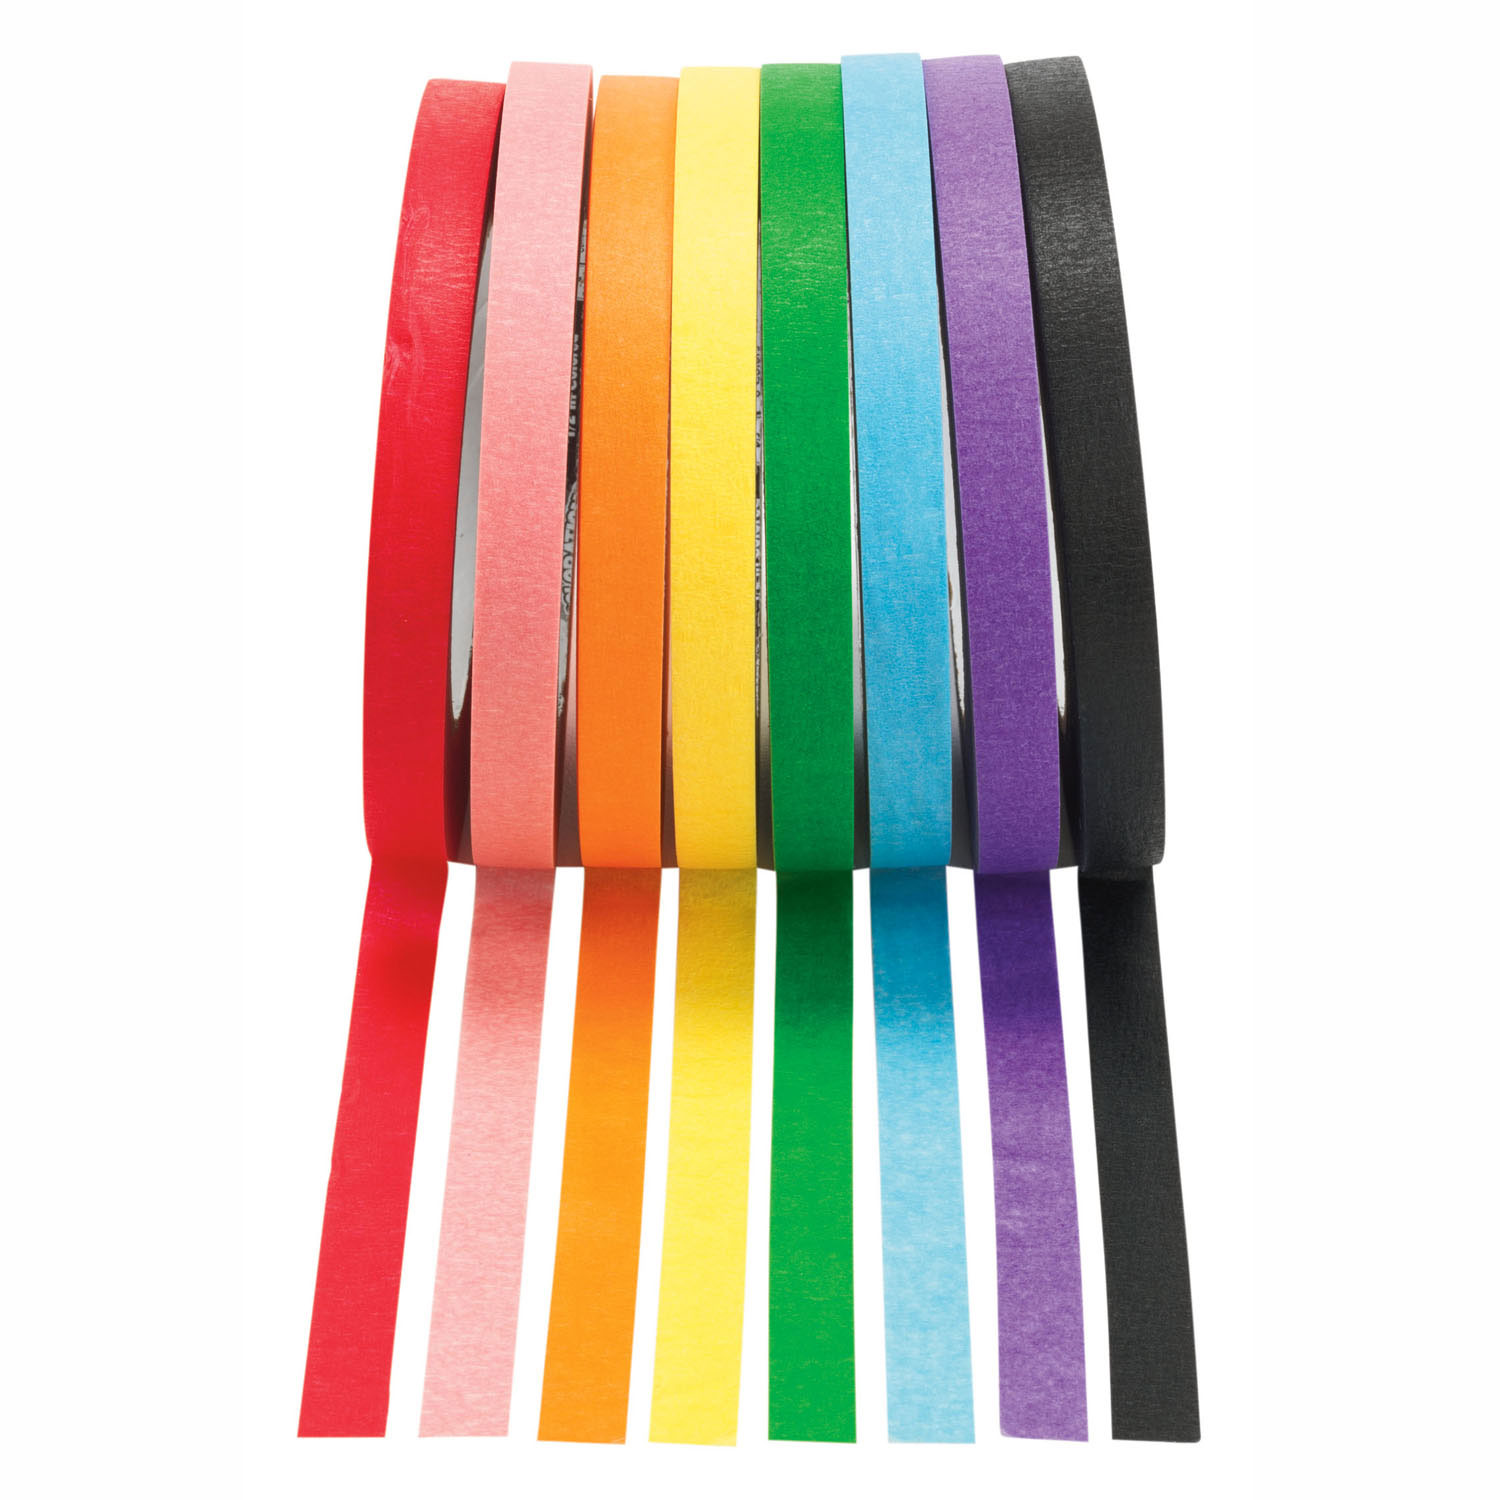 Colorations – Abdeckband 8 Farben – 55 Meter pro Farbe